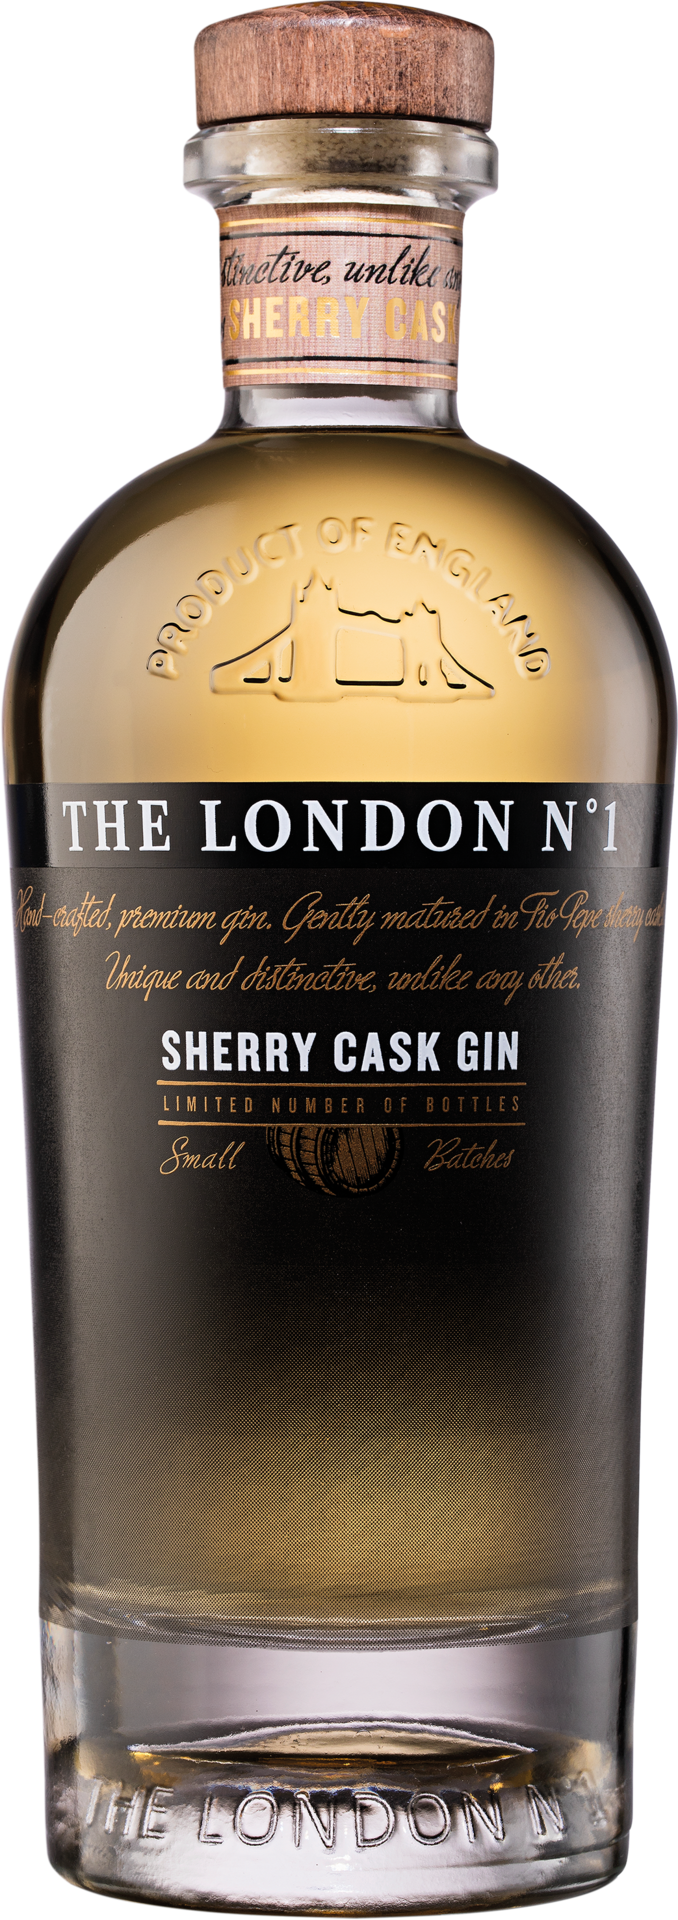 The London N° 1 Sherry Cask